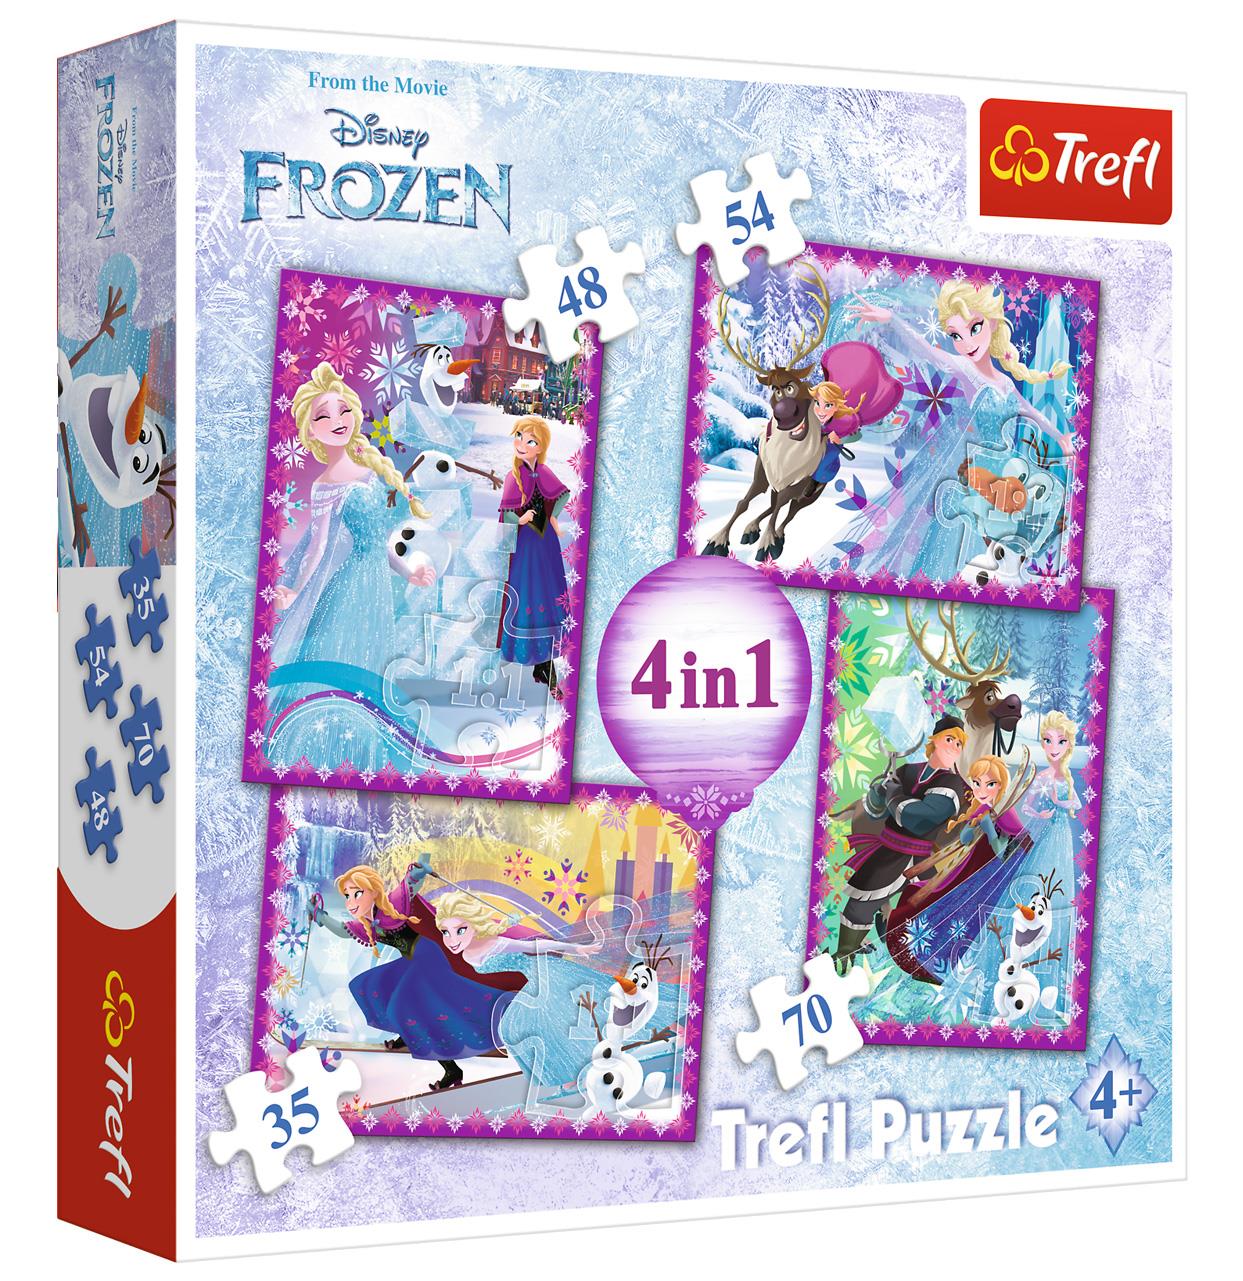 Trefl Çocuk Puzzle 34294 Frozen Winter Frenzy, Disney 35+48+54+70 Parça 4 in 1 Puzzle